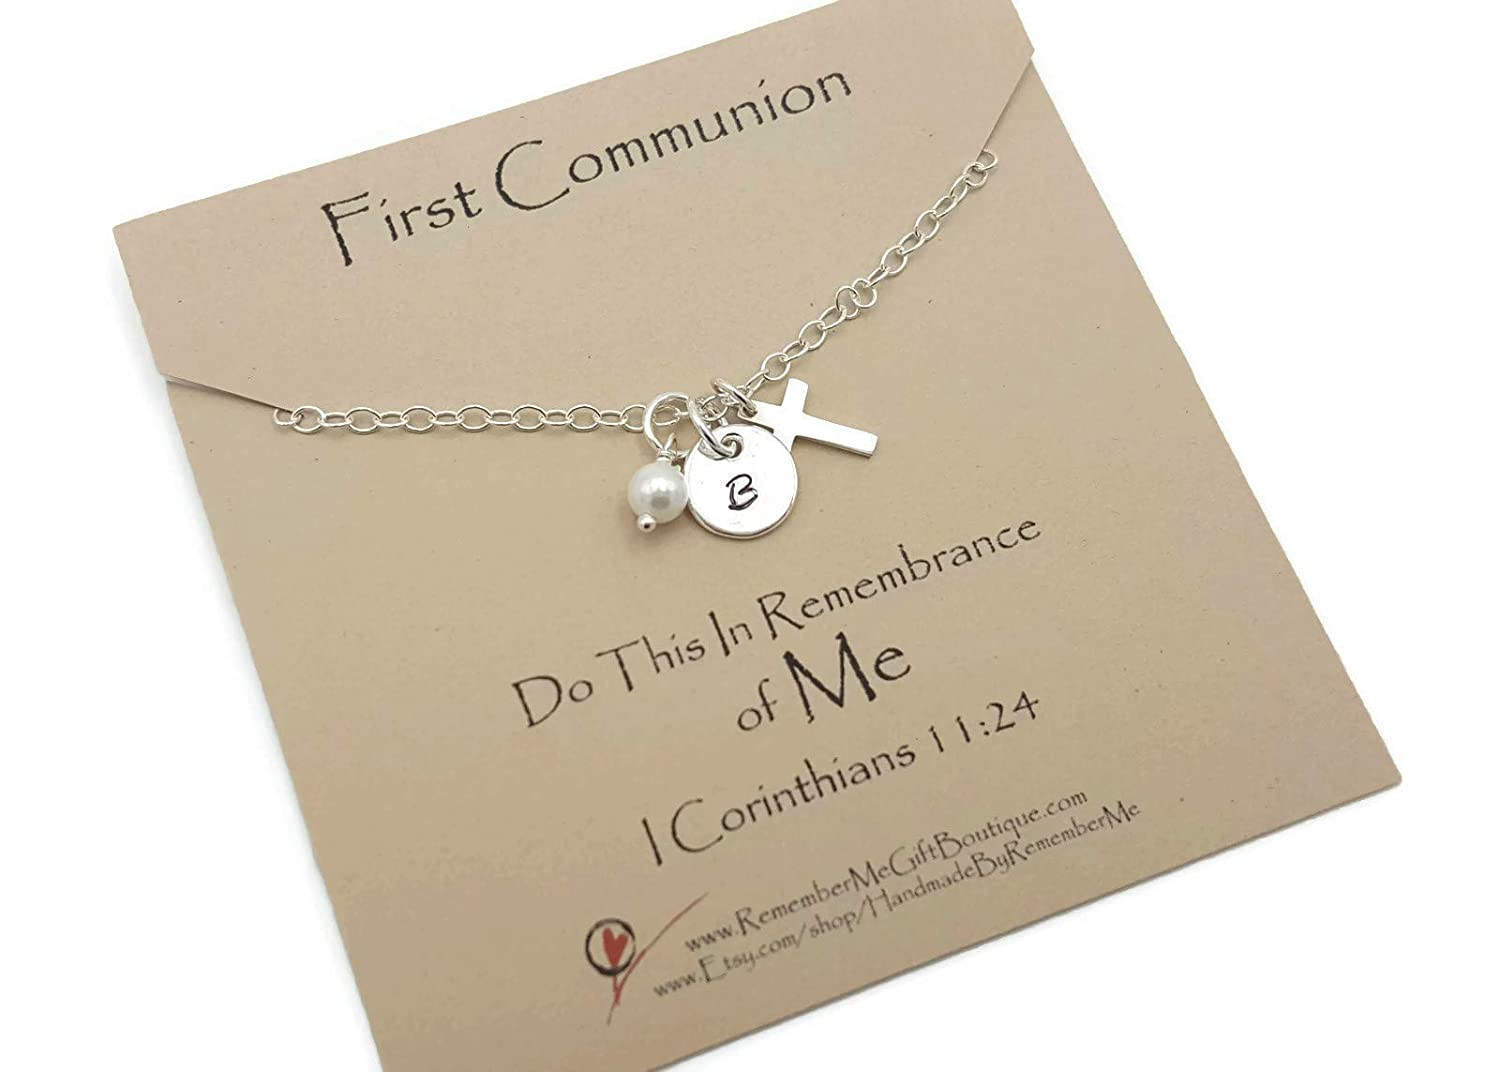 First Communion Gift Ideas Girls
 Amazon First munion Gift Ideas for Girls First